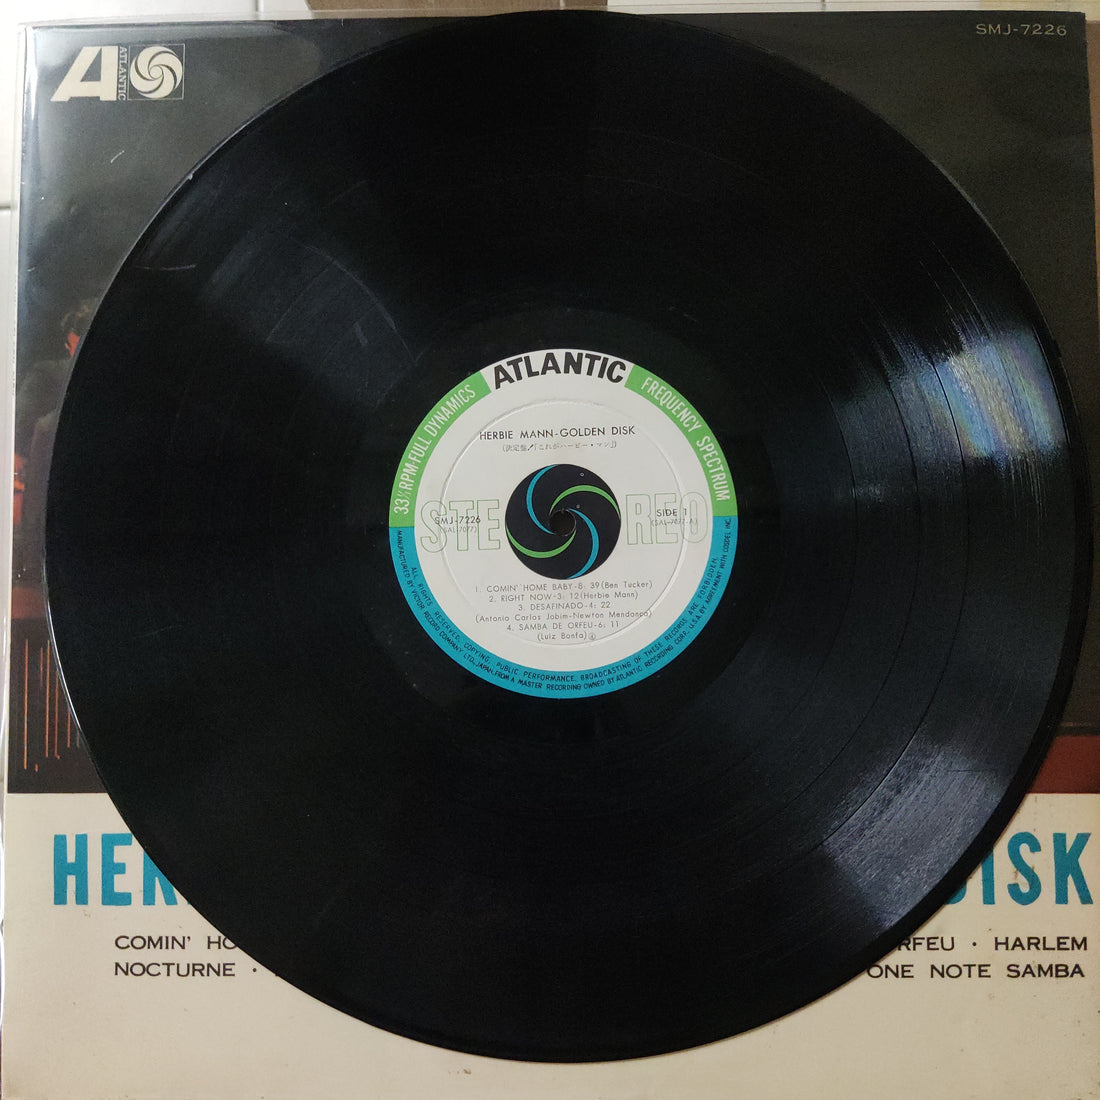 Herbie Mann - Golden Disk (Vinyl) (VG+)